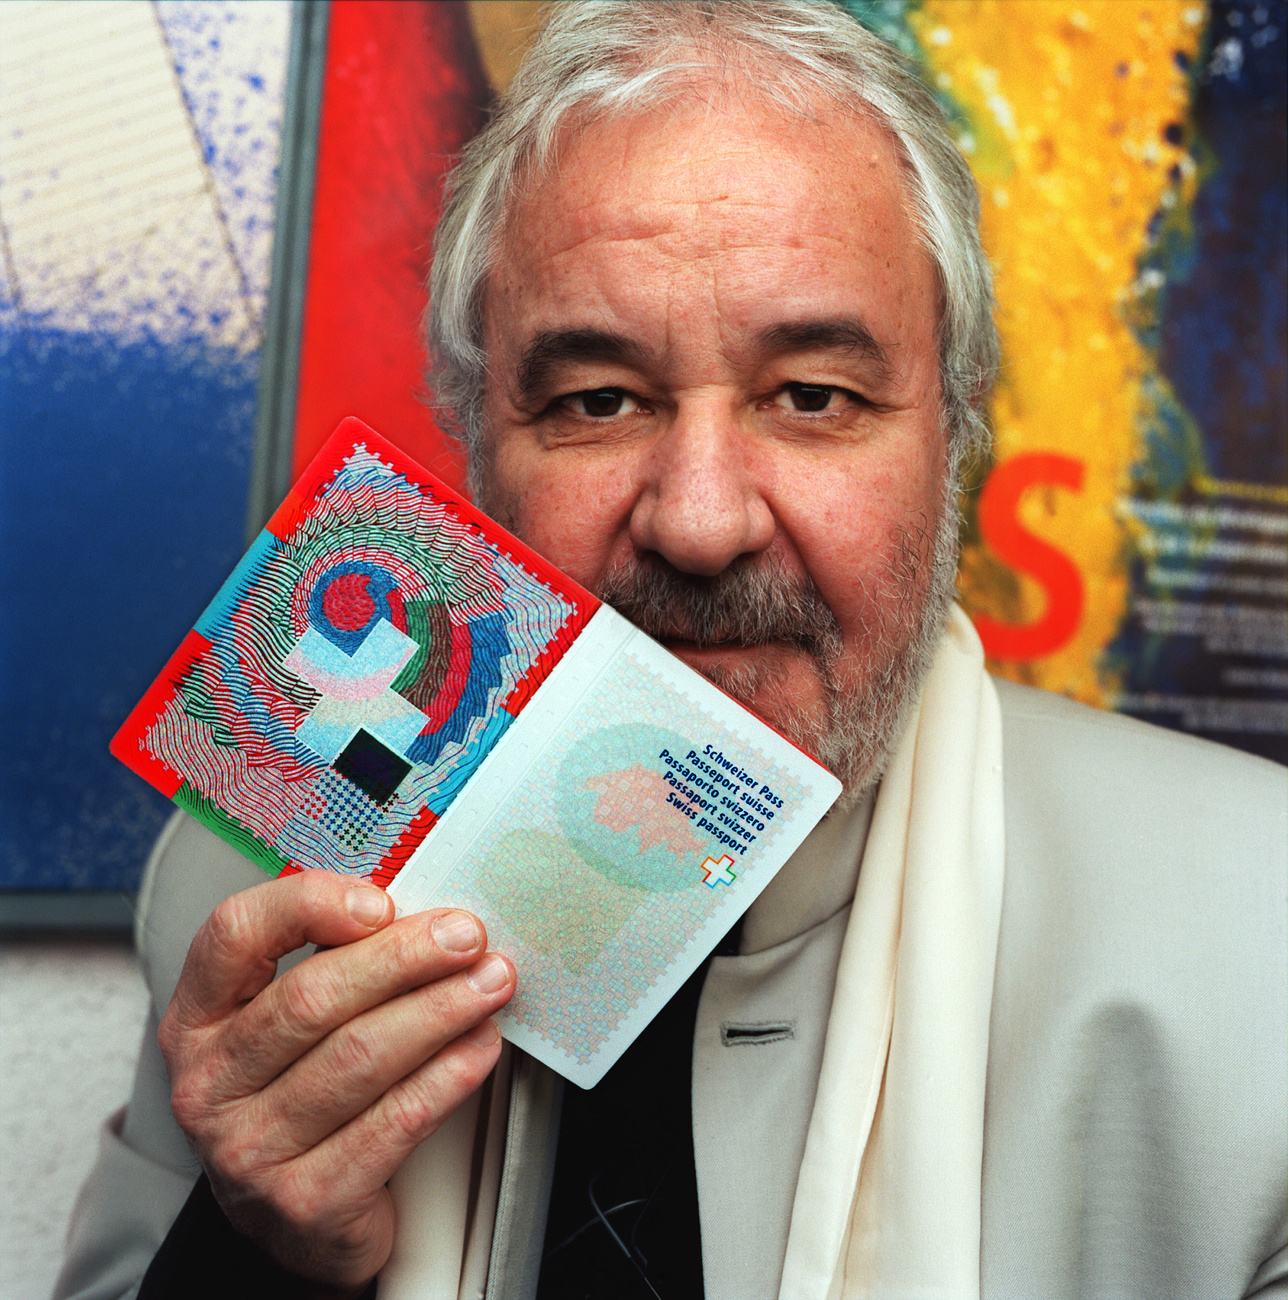 Roger Pfund with Swiss Passport